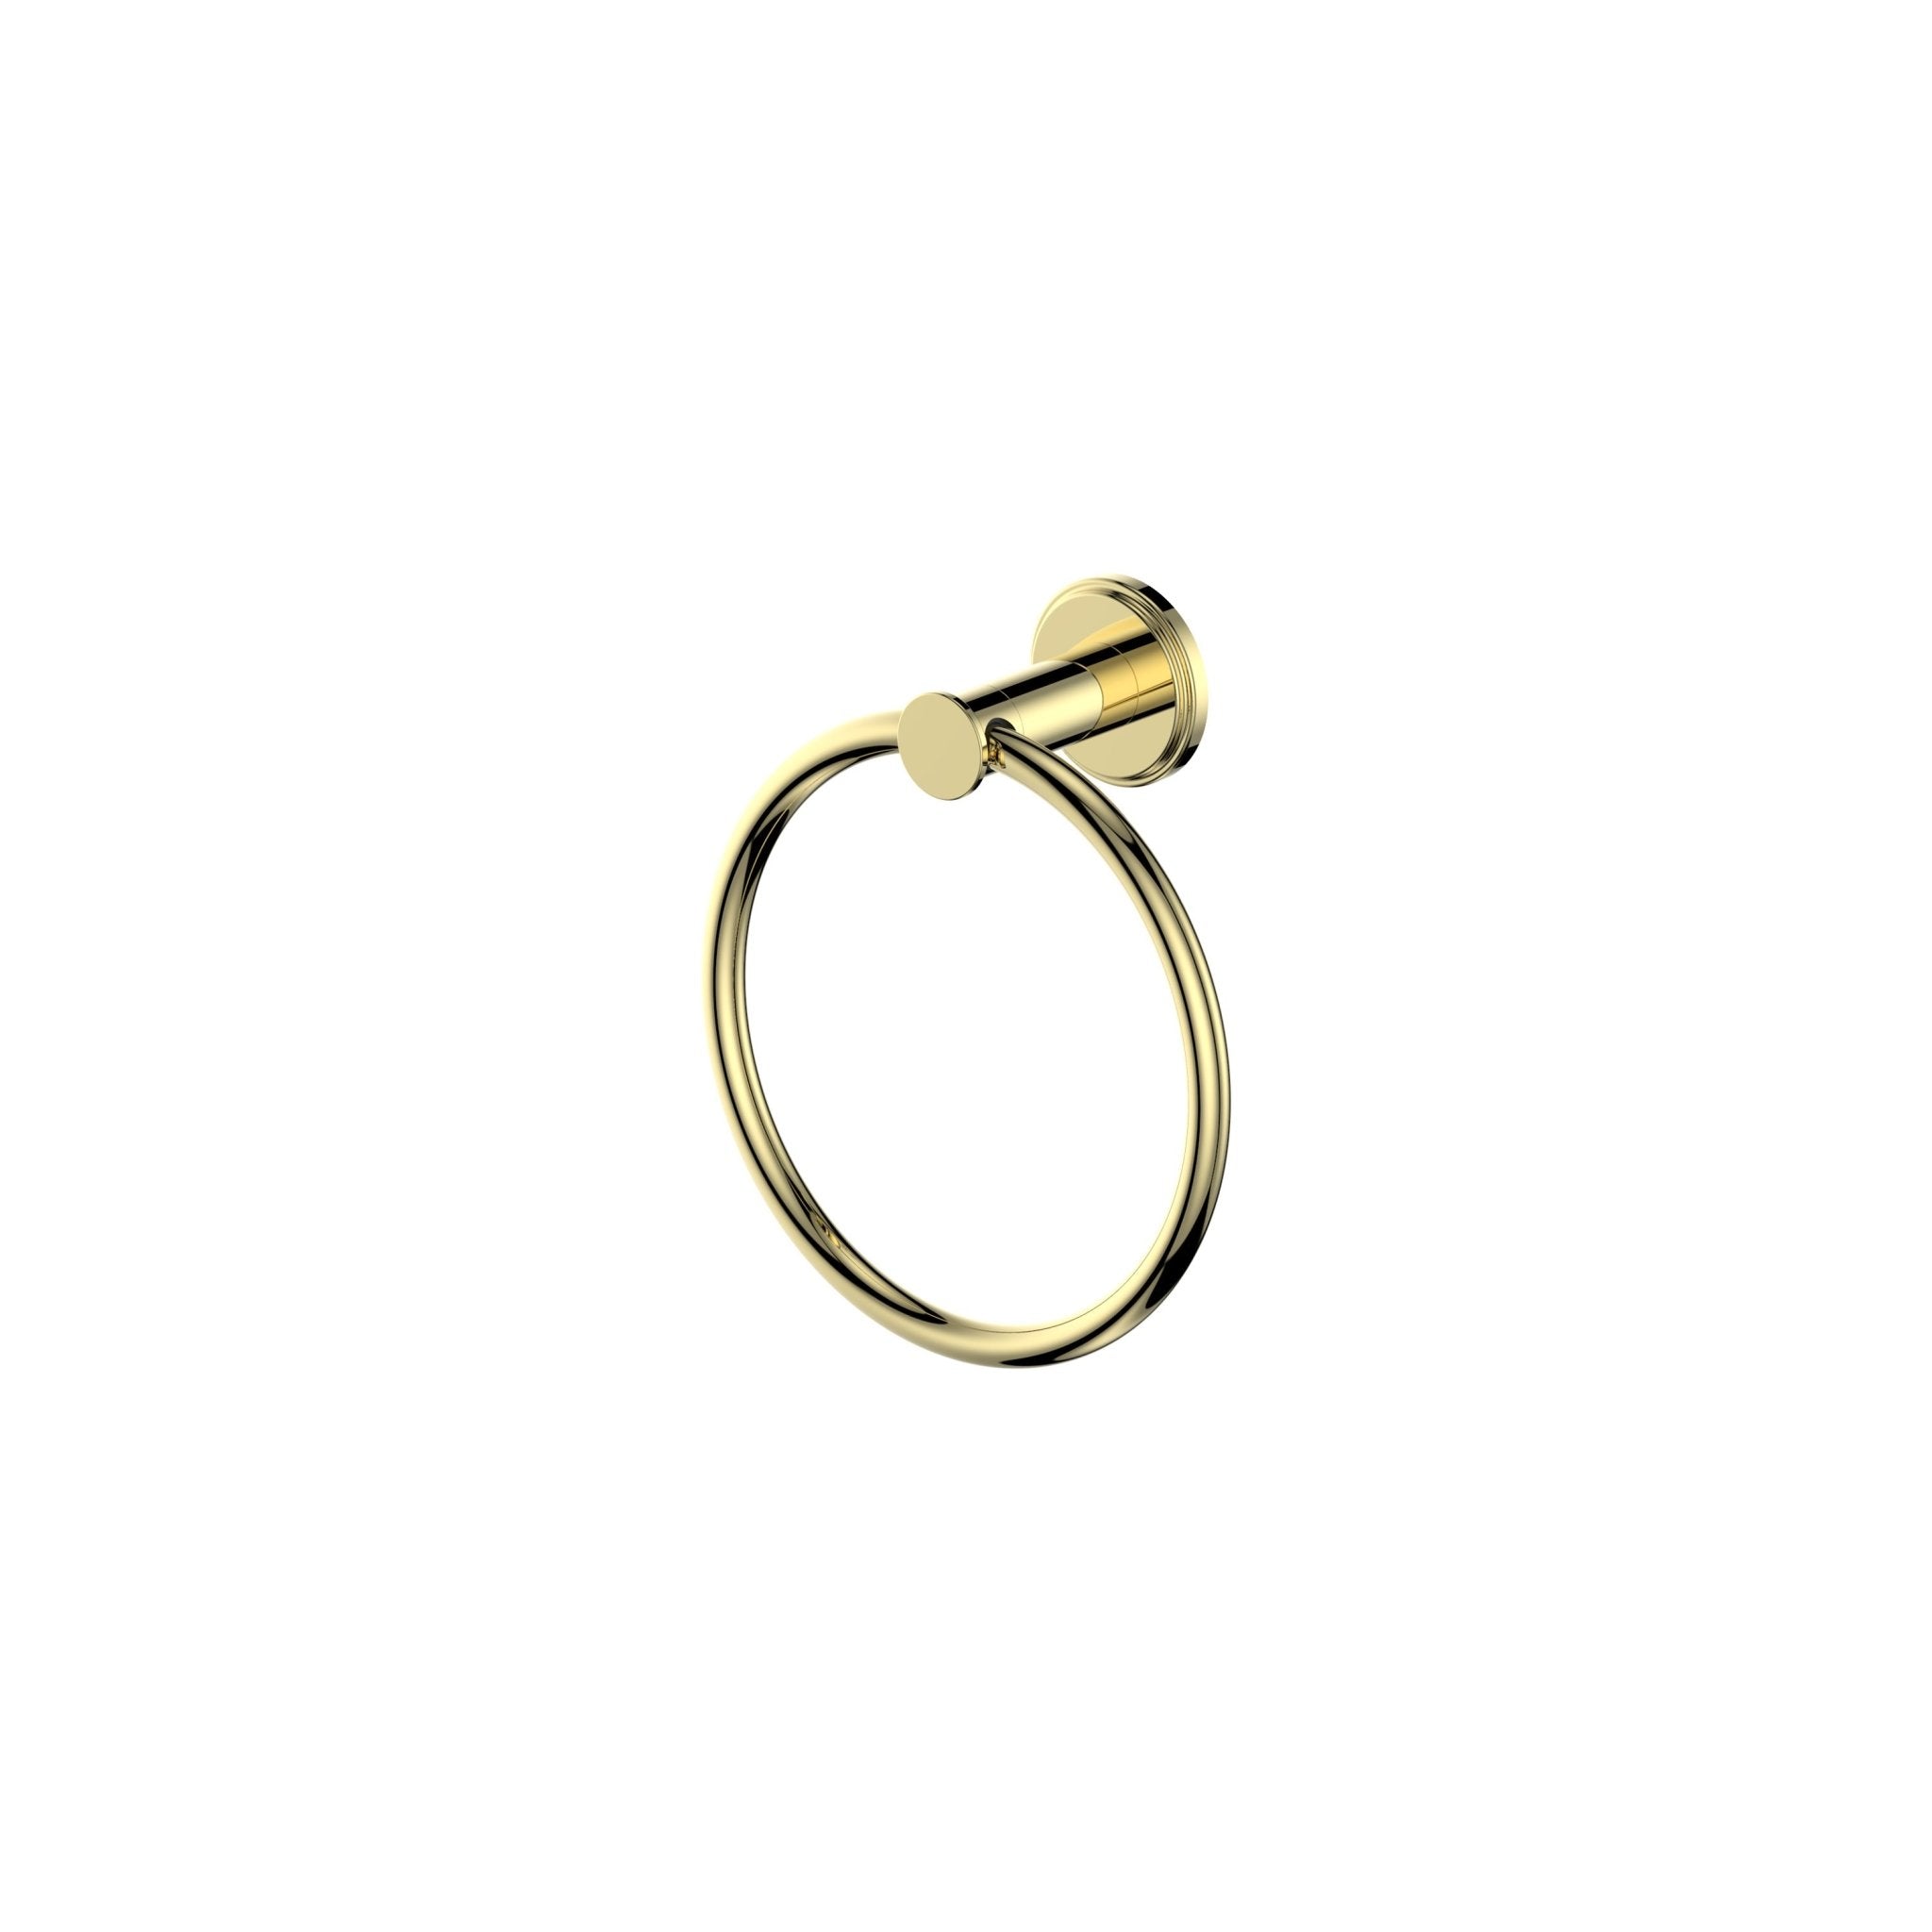 ZLINE El Dorado Towel Ring in Polished Gold